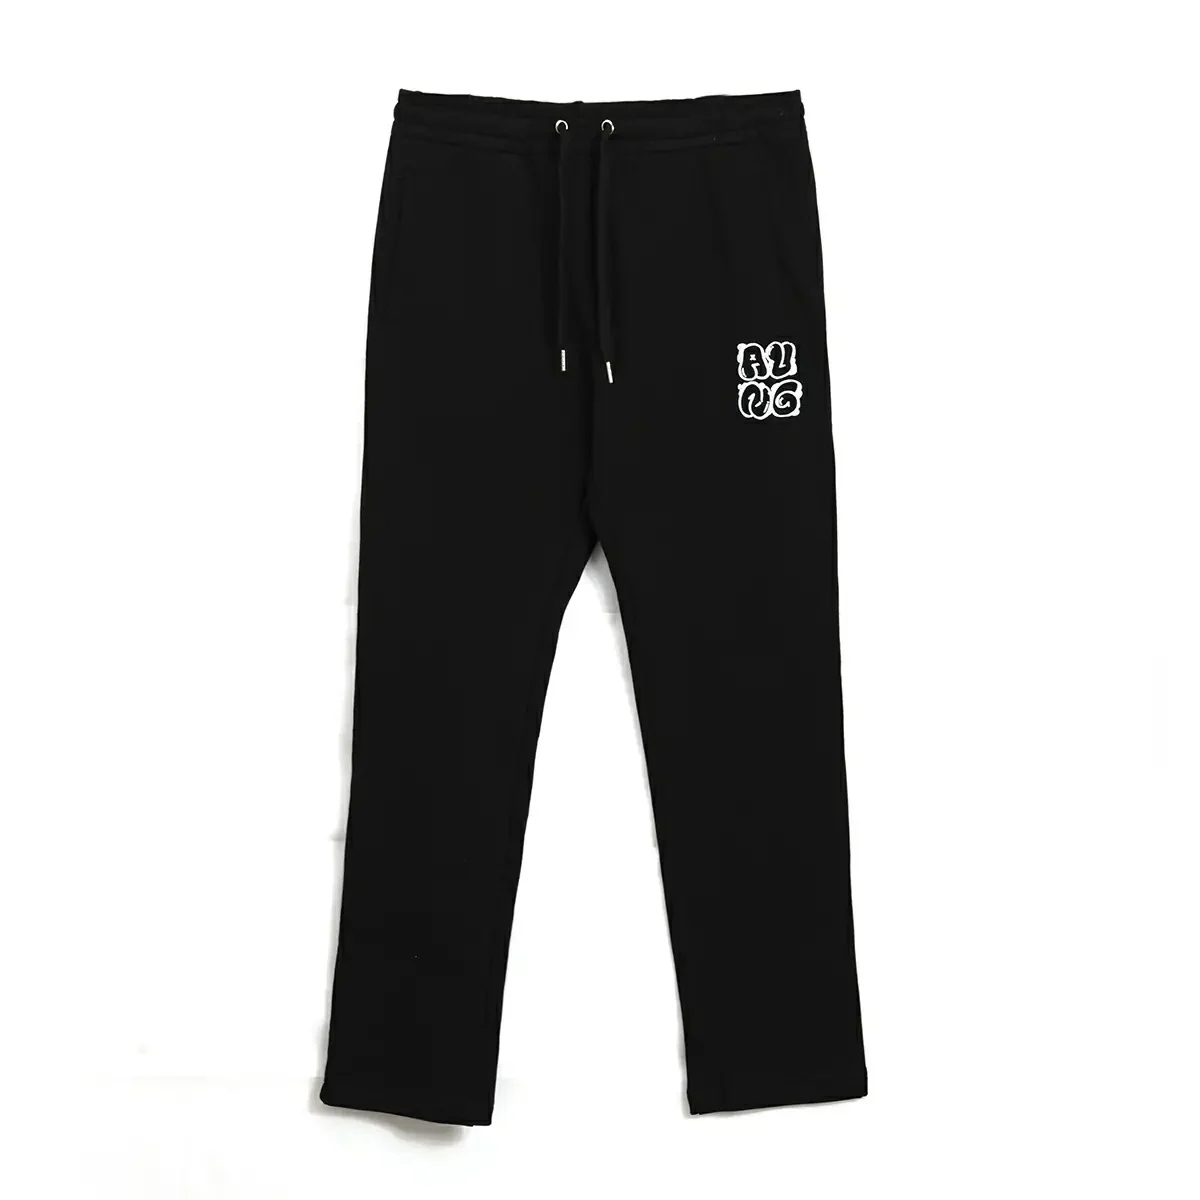 black-long-pants-with-heat-transfer-letters-SFZ-210420-4